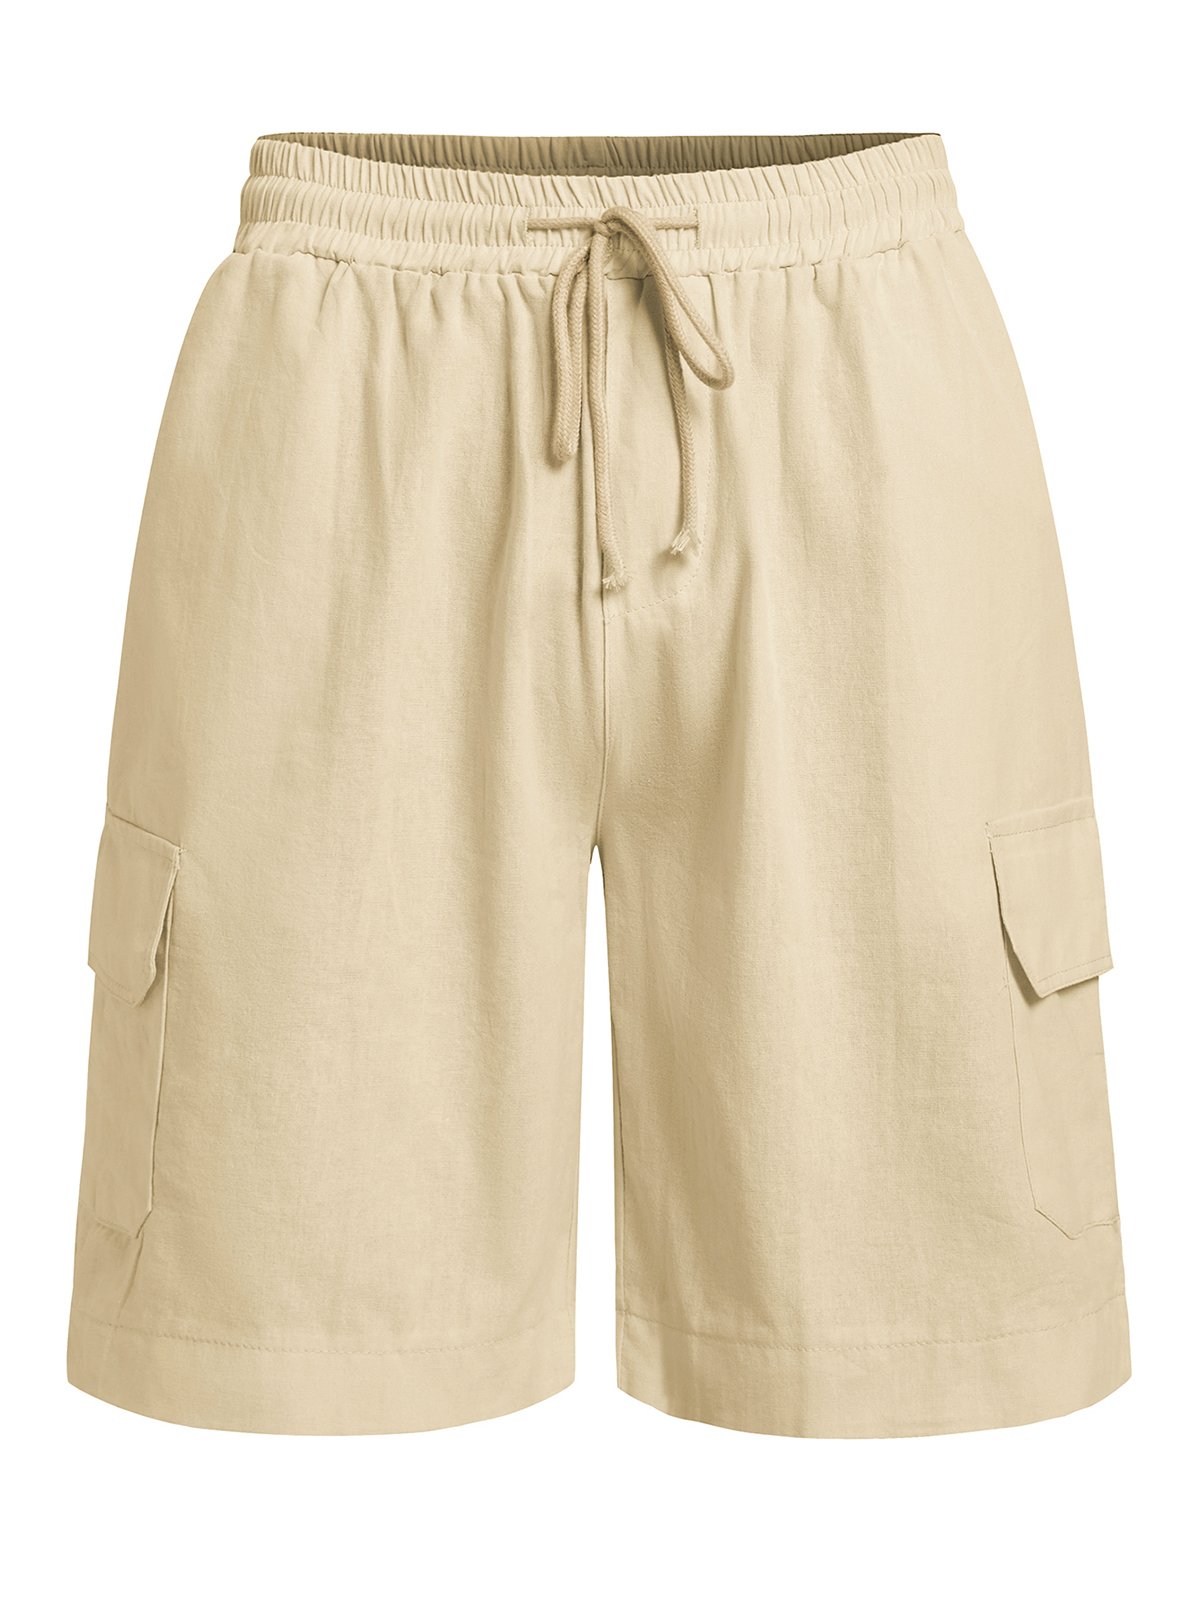 Hardaddy Men's Linen Shorts Multi-Pocket Tie Cargo Pants